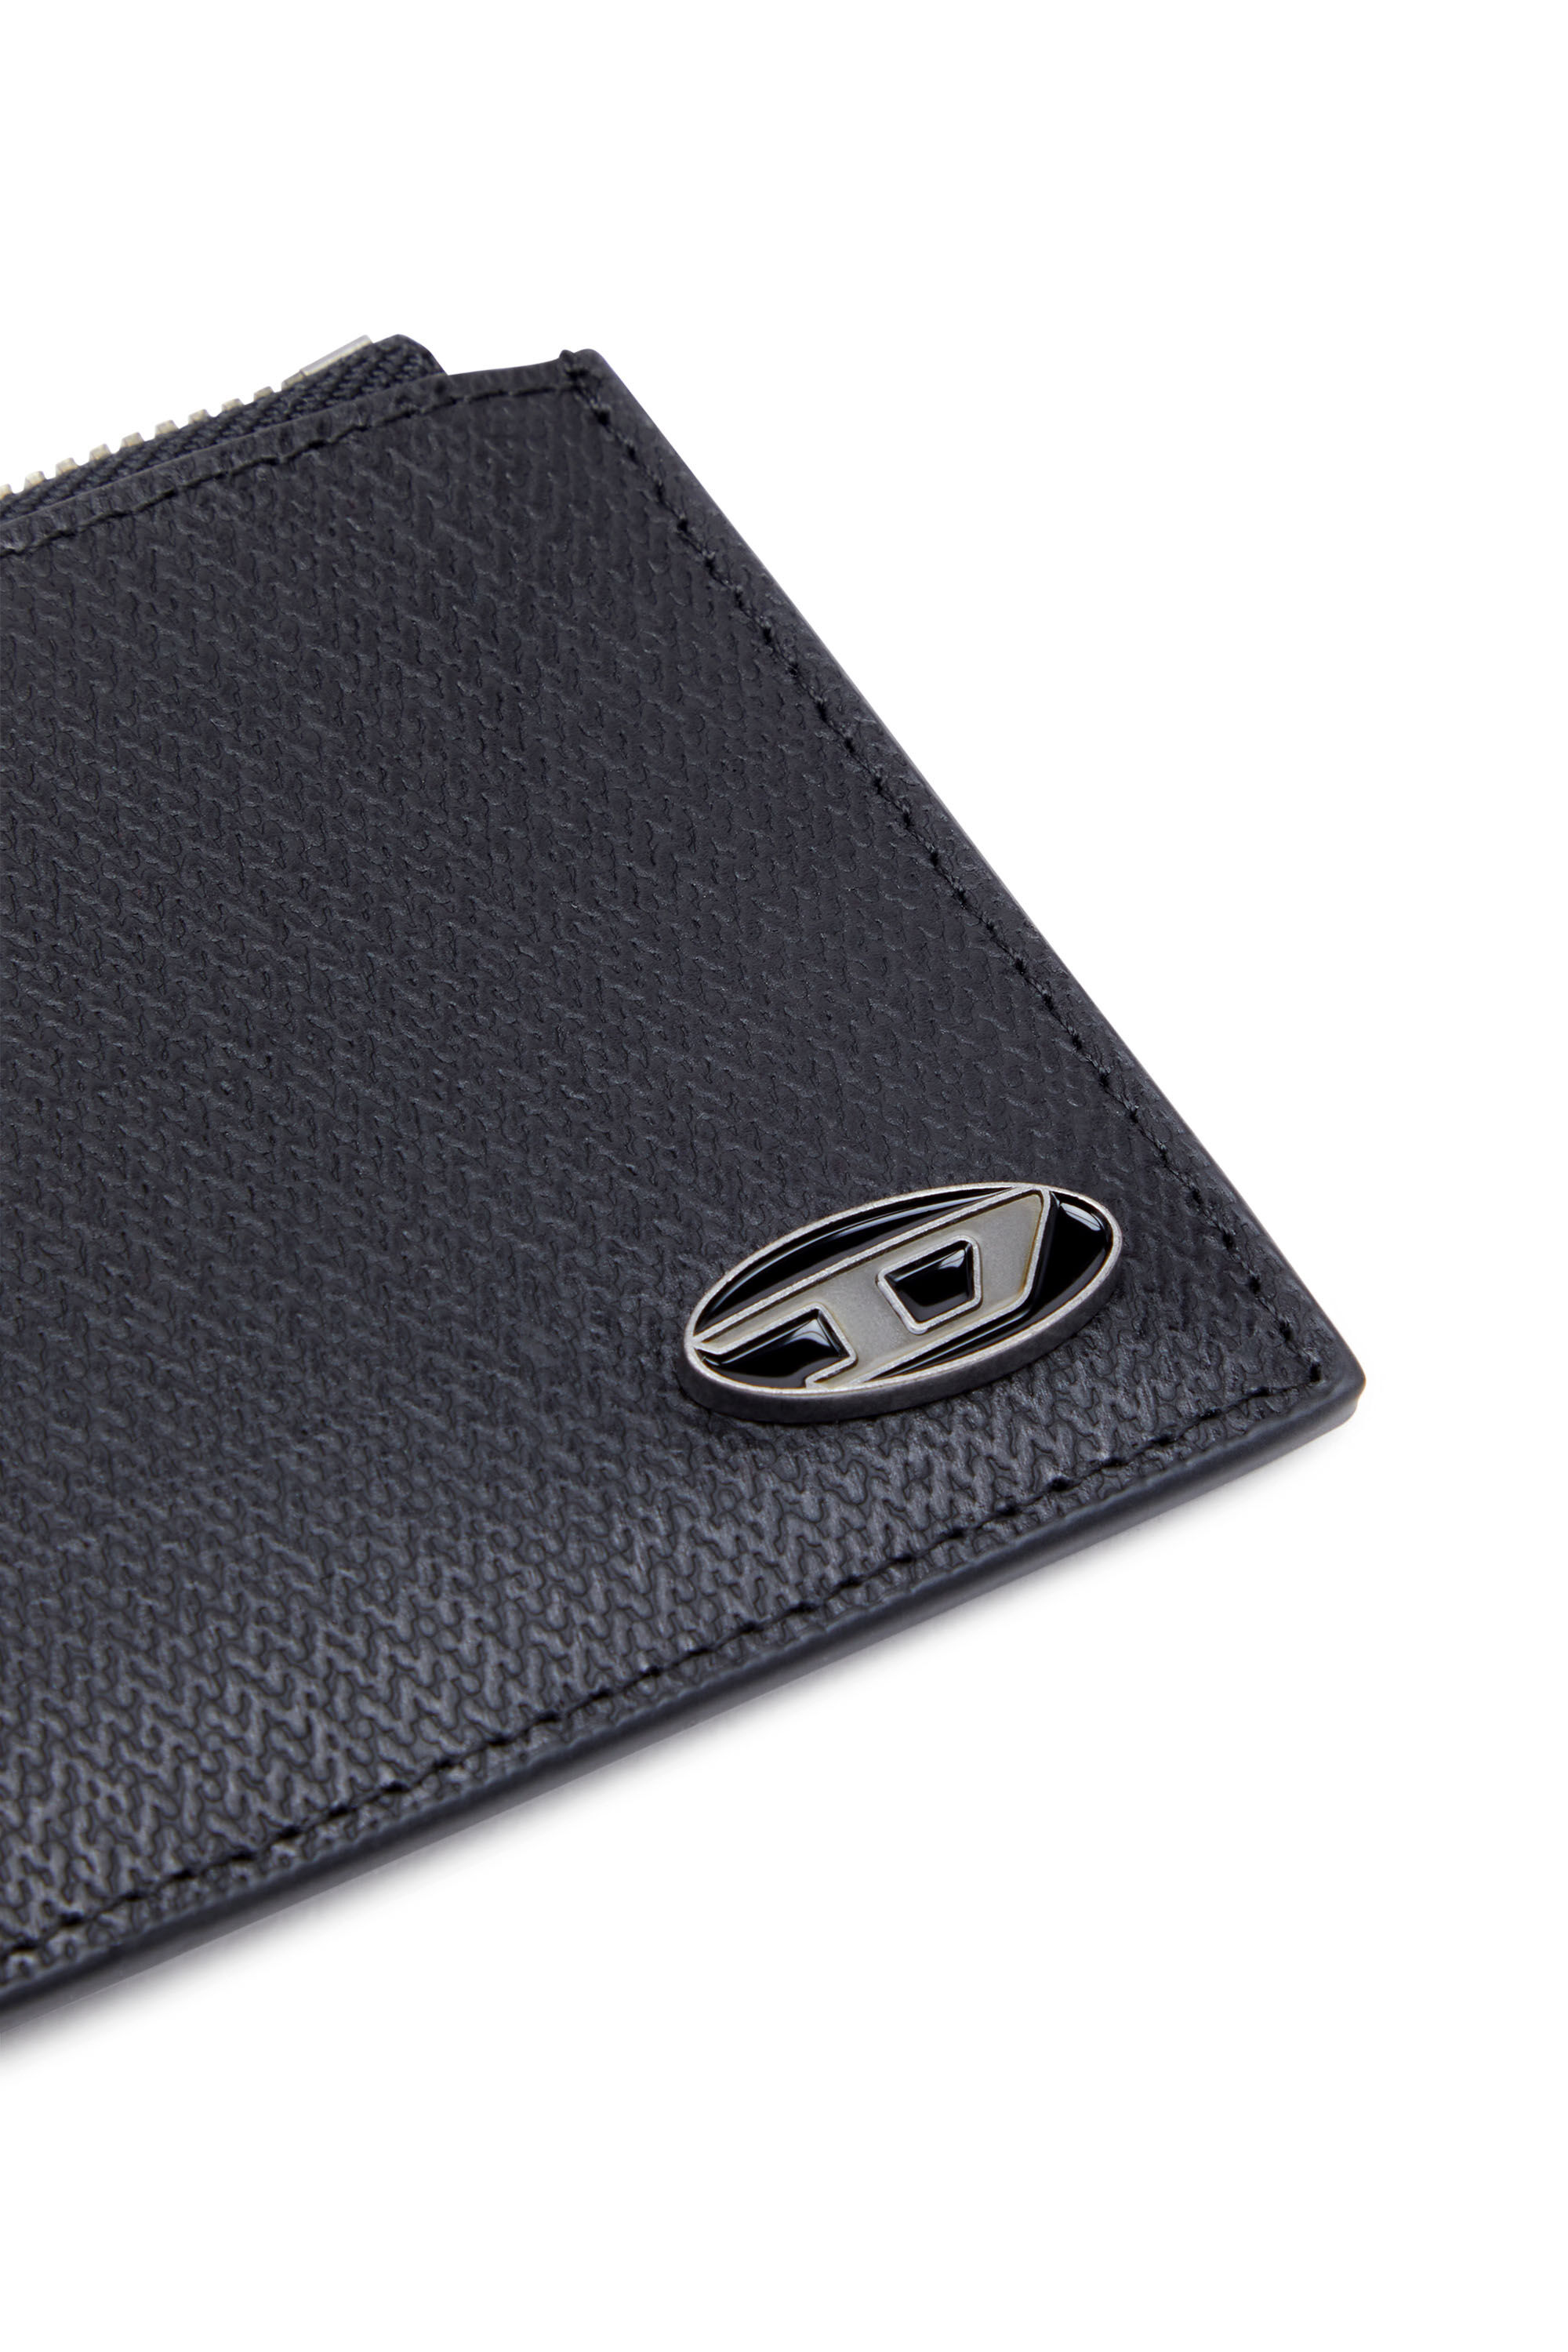 Diesel - CARD HOLDER COIN M, Man Slim card holder in textured leather in Black - Image 4